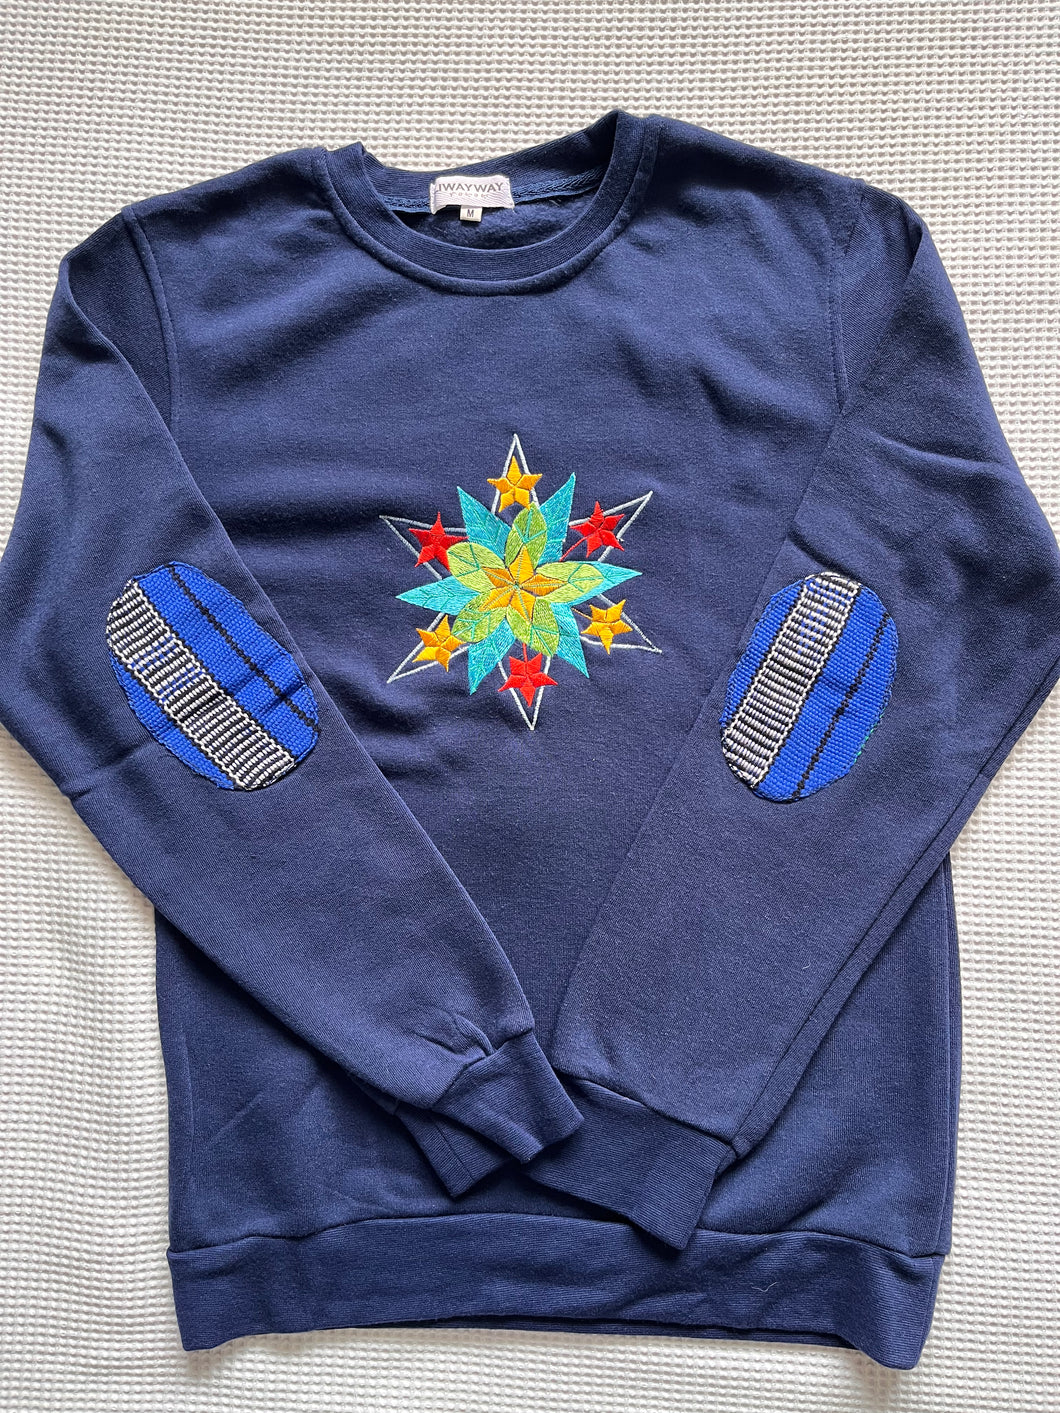 Parol blue sweaters 55 size M